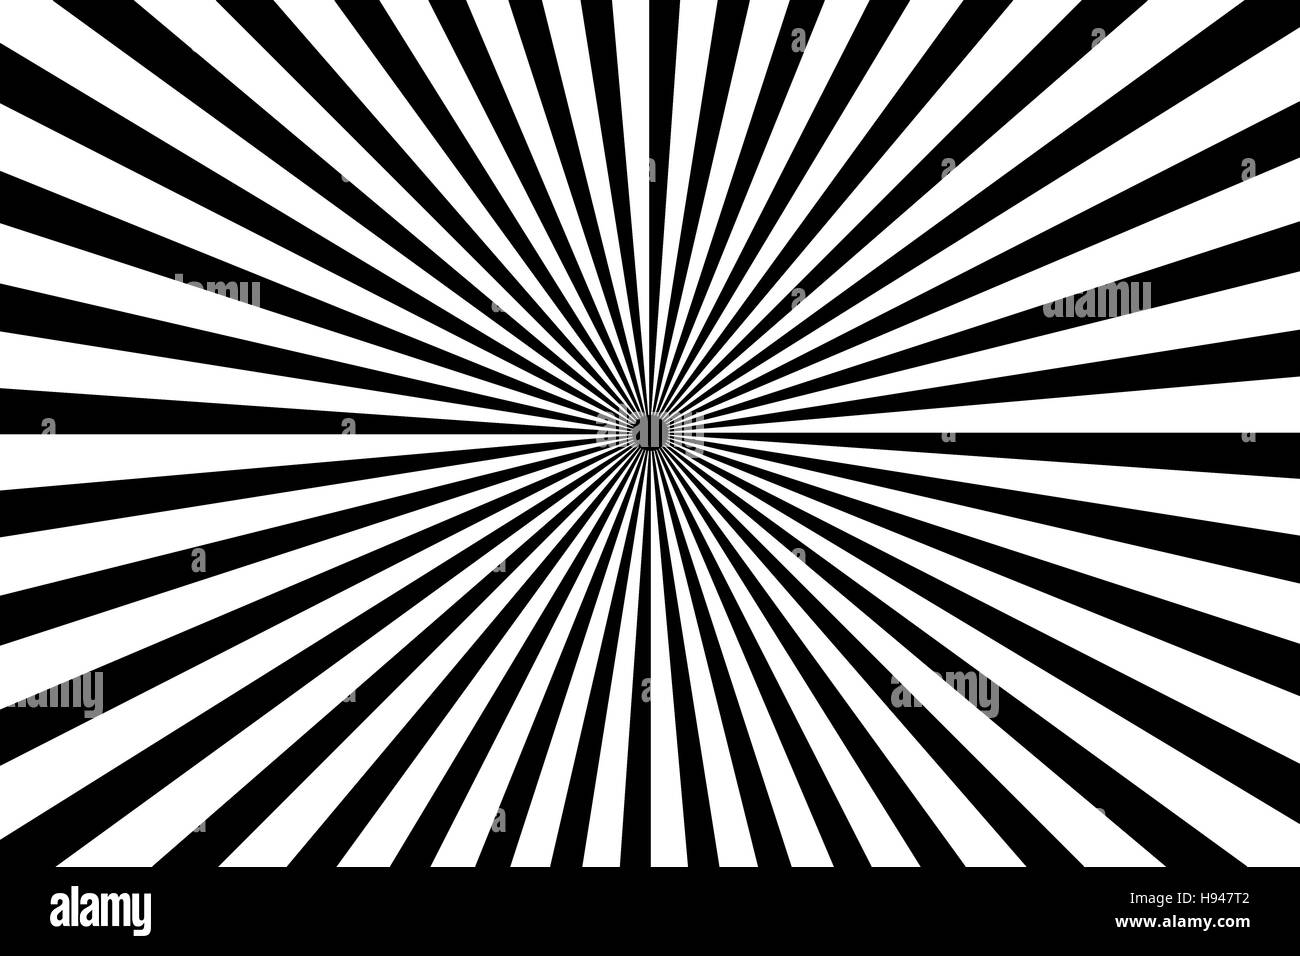 Radiating black and white line background Stock Photo - Alamy